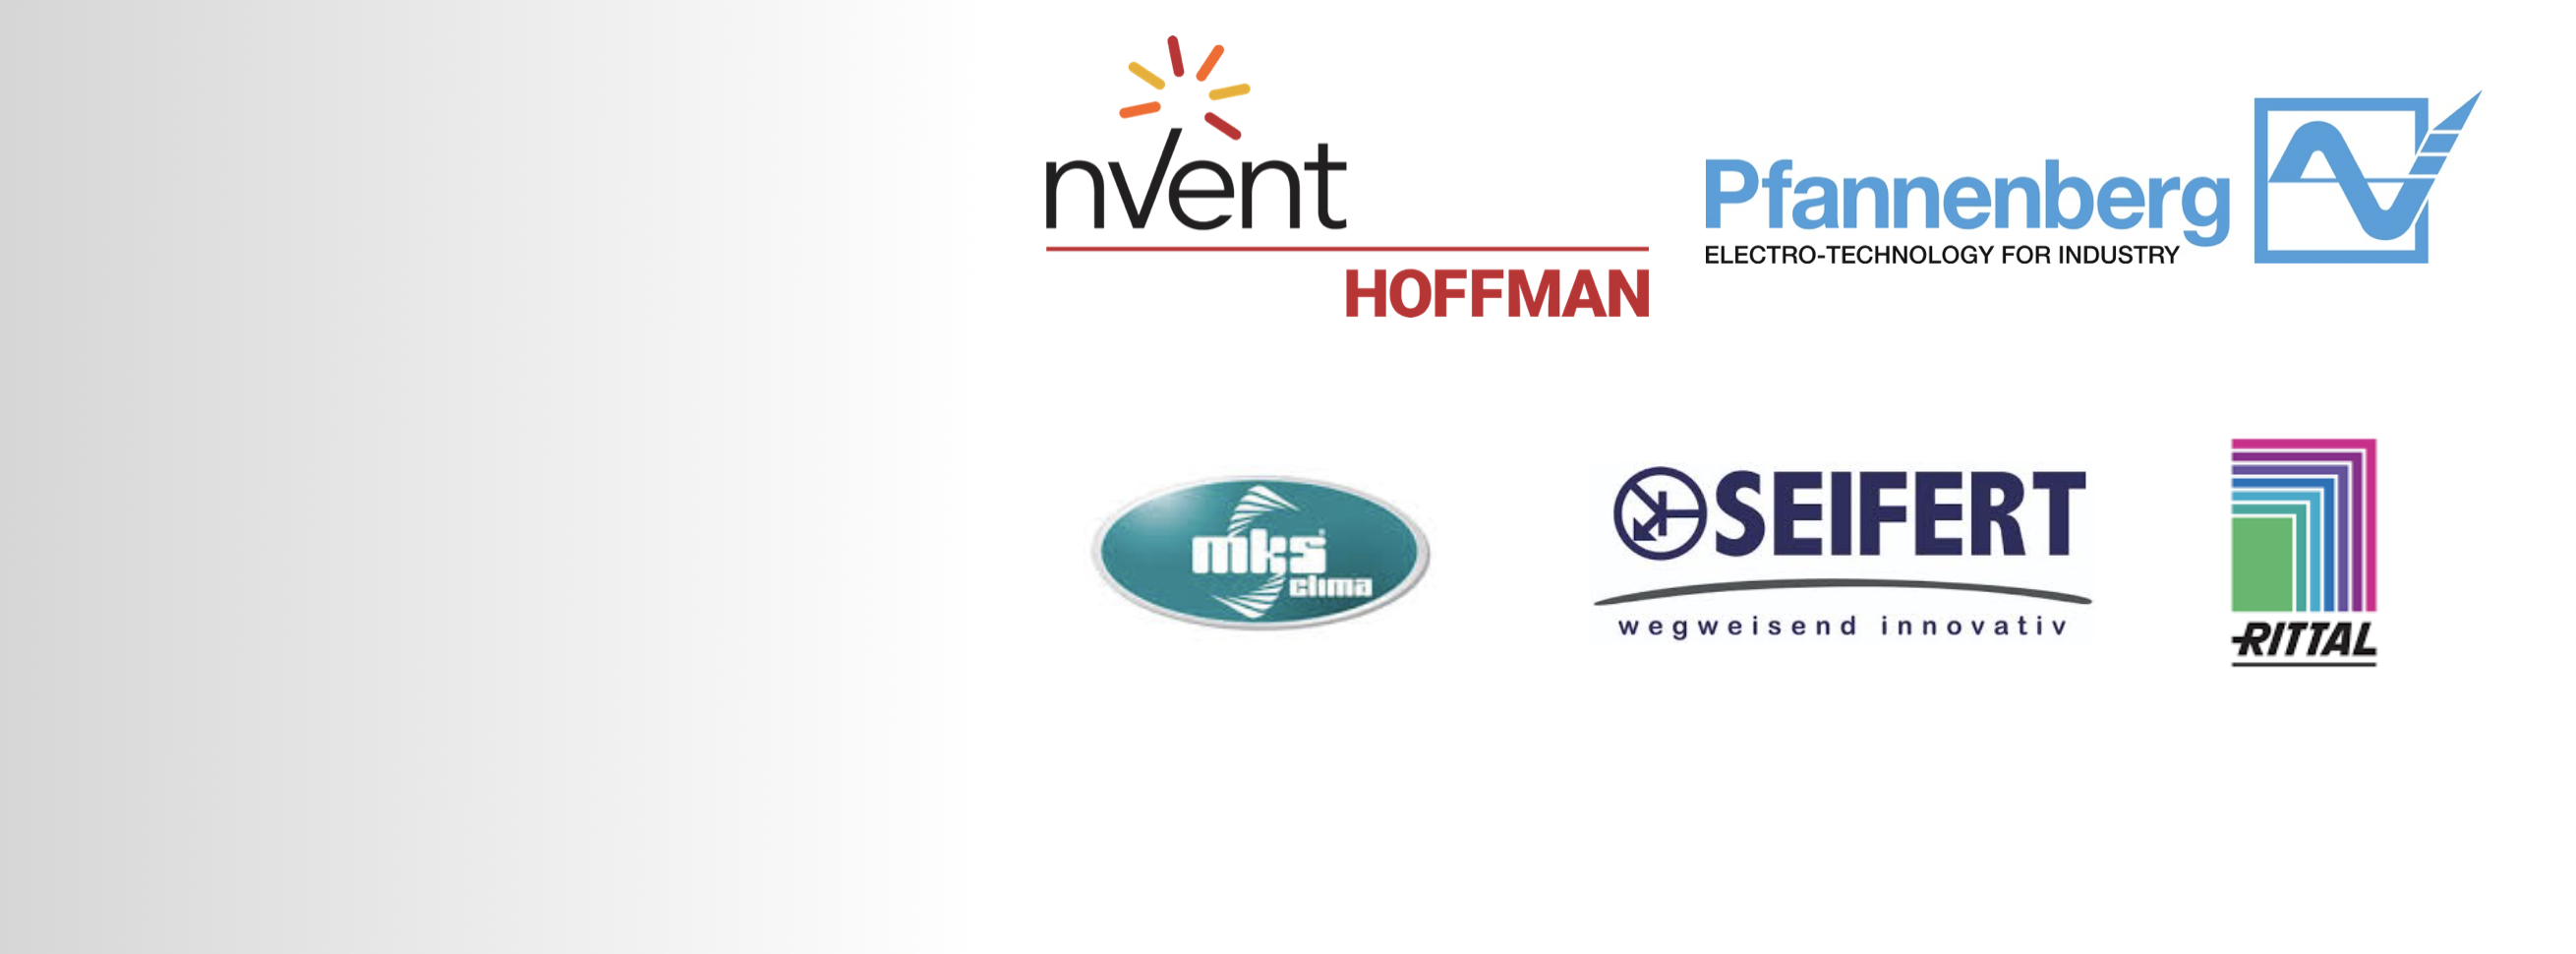 Cnet Industrial brand logos 